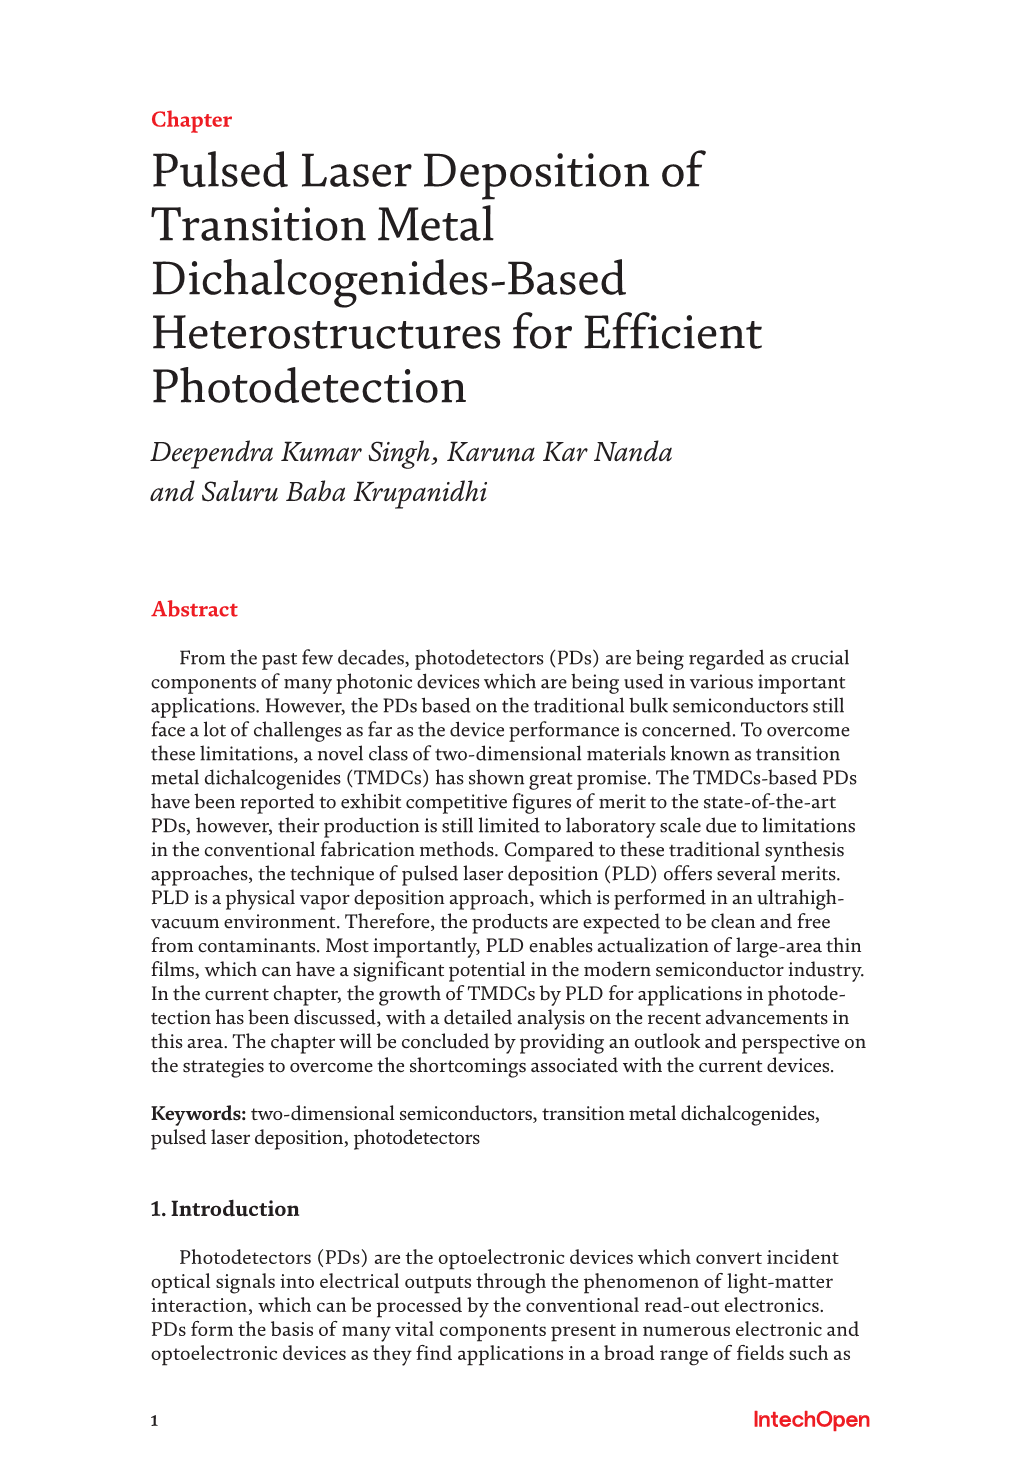 Pulsed Laser Deposition of Transition Metal Dichalcogenides-Based Heterostructures for Efficient Photodetection